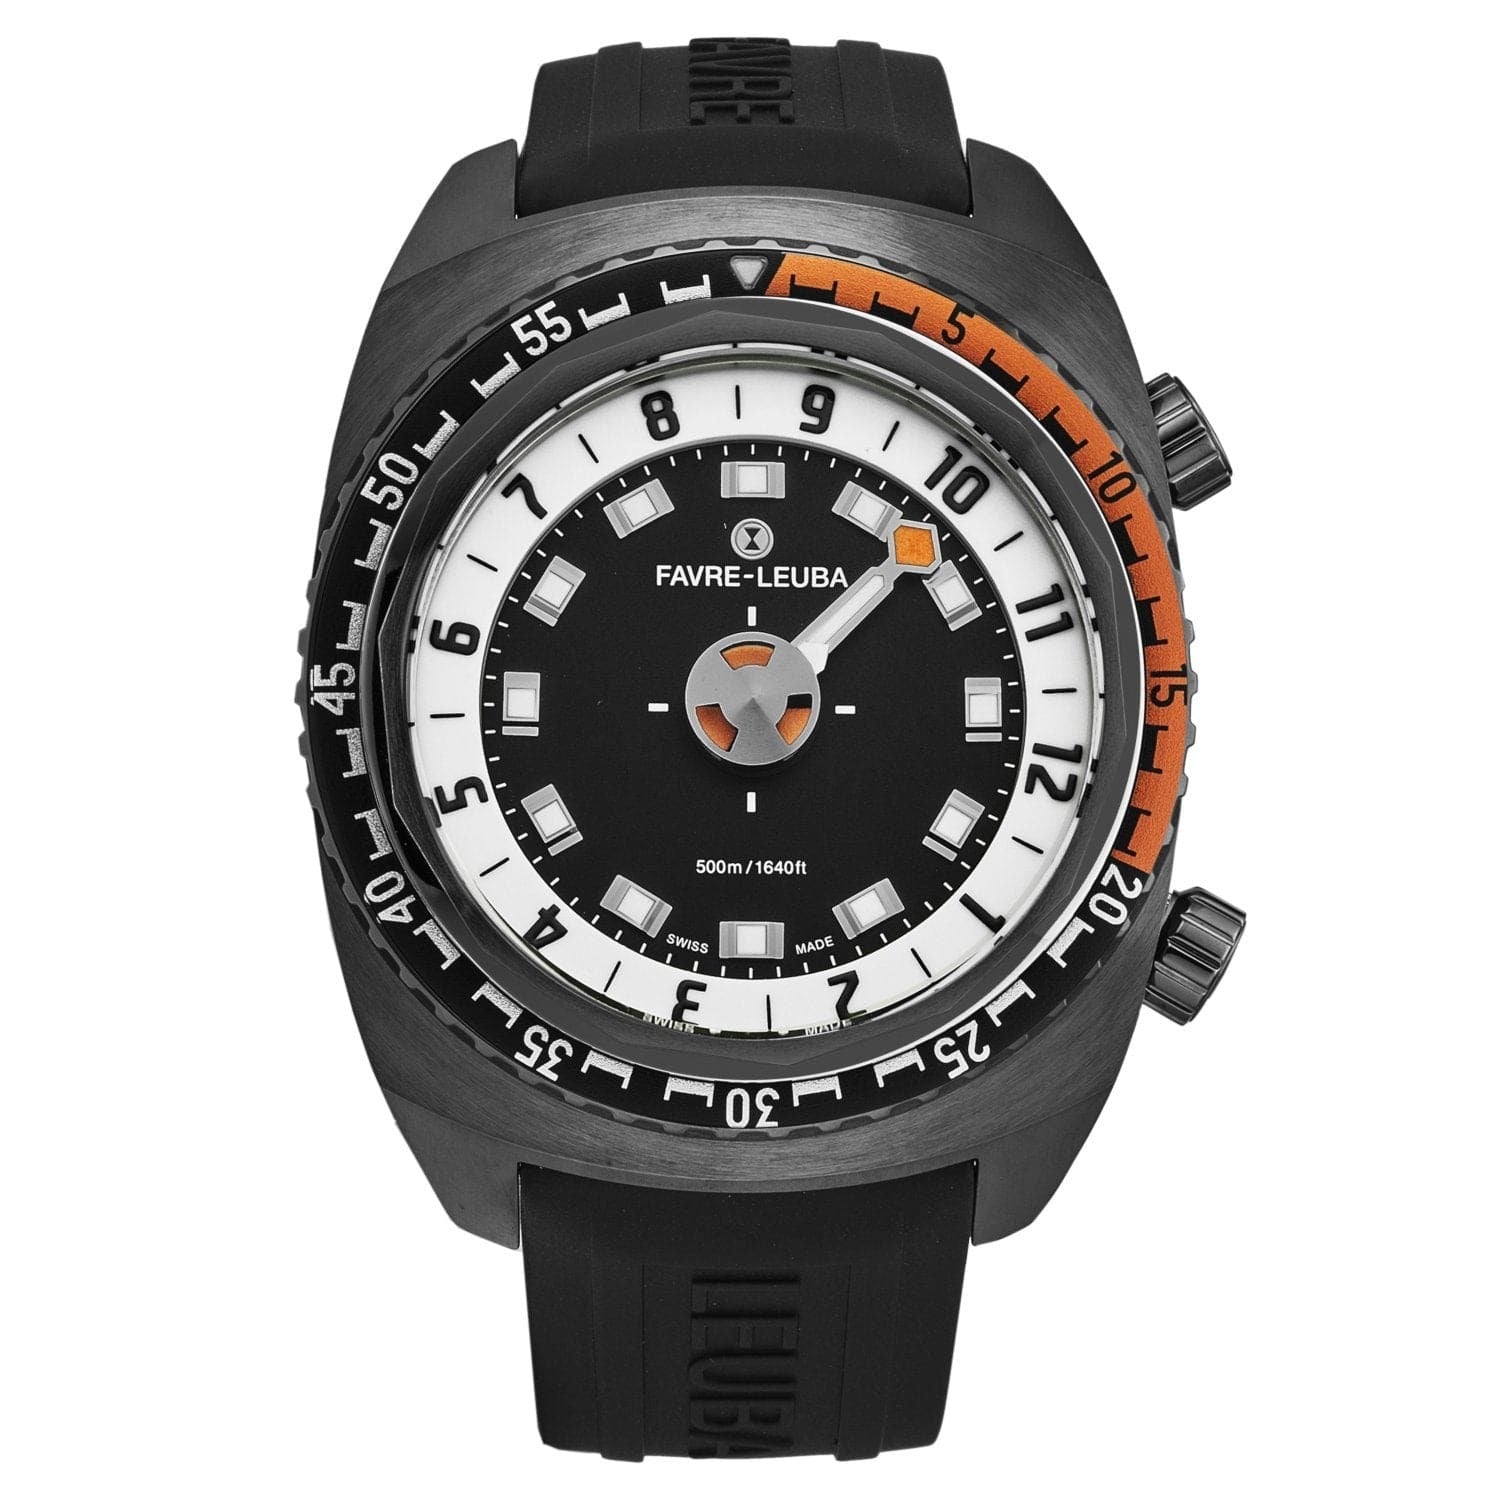 A Favre-Leuba Men's 00.10101.09.13.31 'Raider Harpoon' Black White Dial Black Rubber Strap automatic watch, with a black and orange design, showcased against a white background.